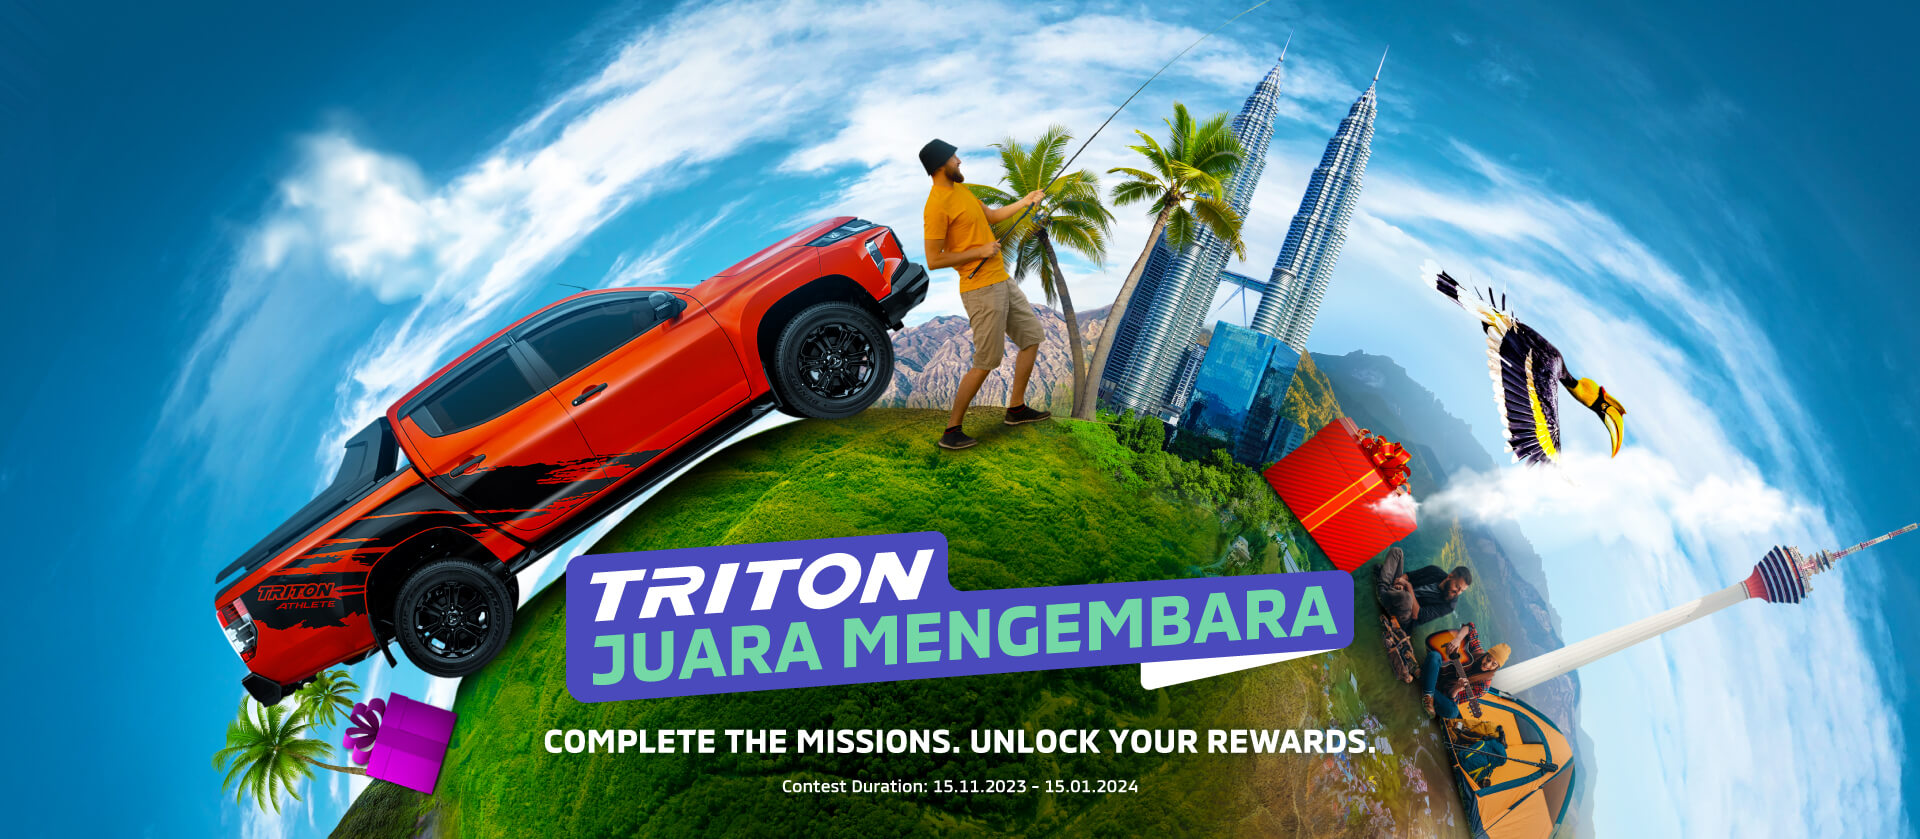 Enter Mitsubishi Motors Triton Juara Mengembara campaign and complete missions from anywhere in Malaysia using your Mitsubishi Triton pickup truck